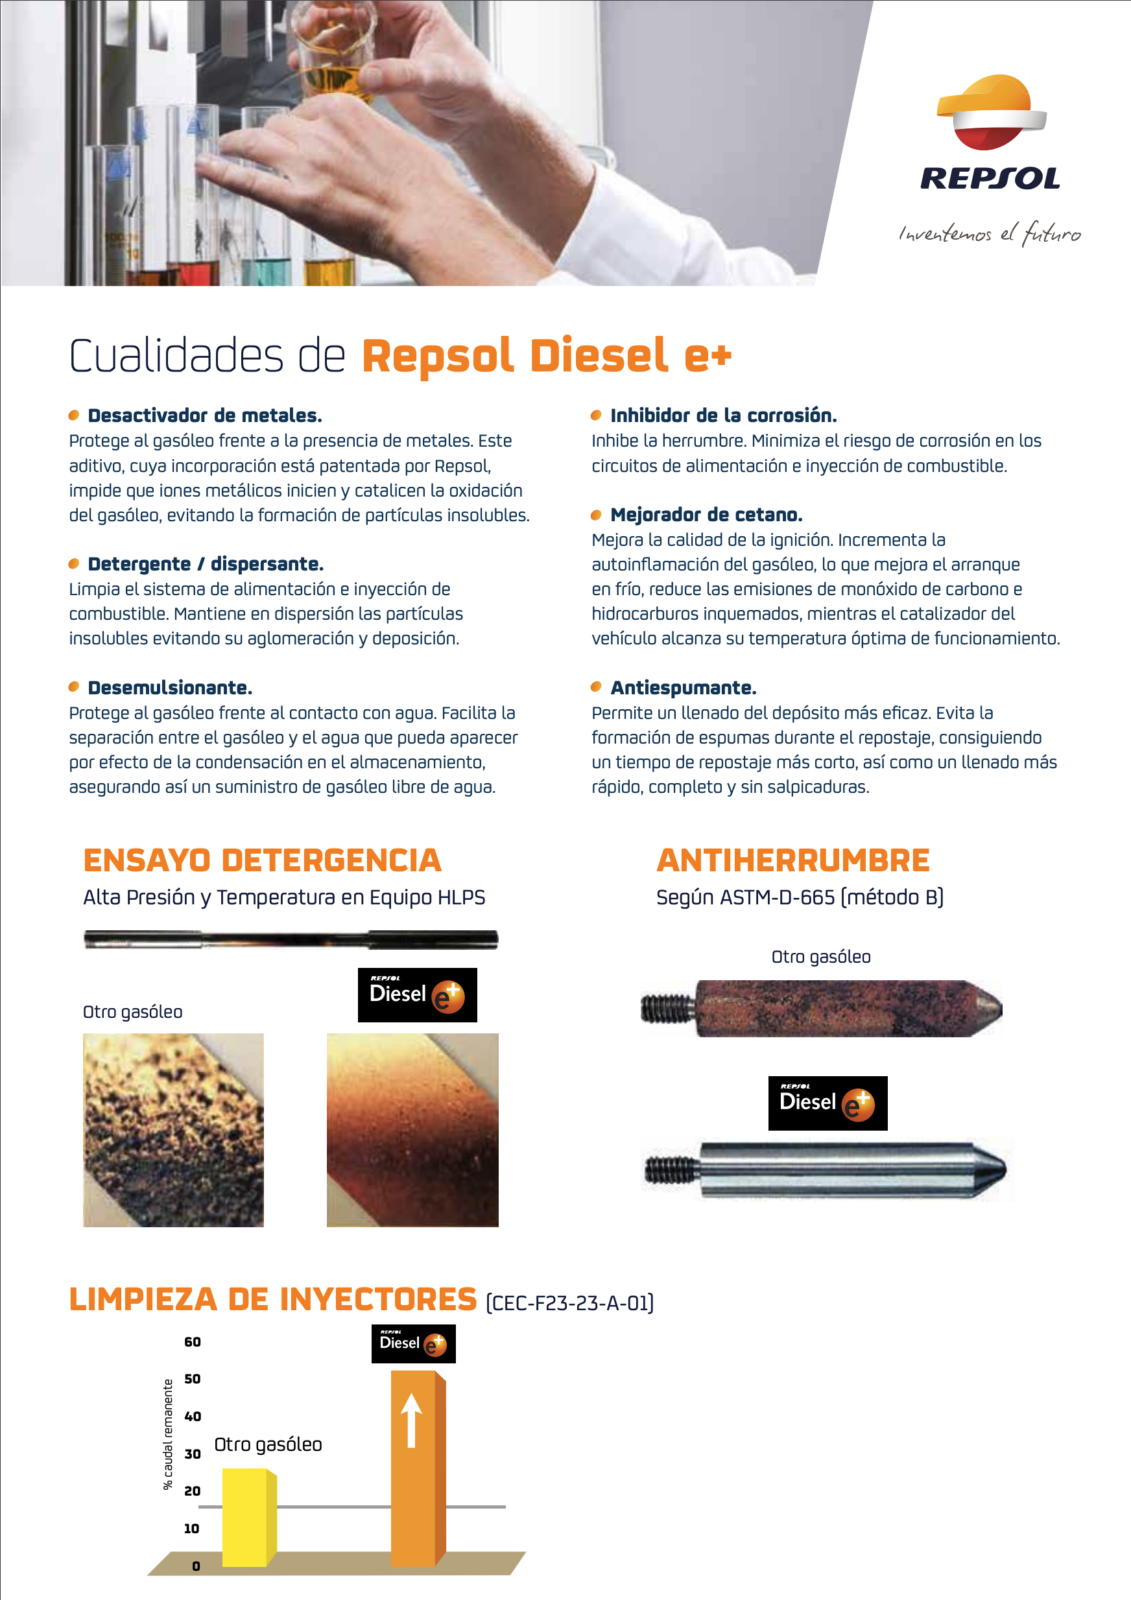 Cualidades Repsol Diesel e+